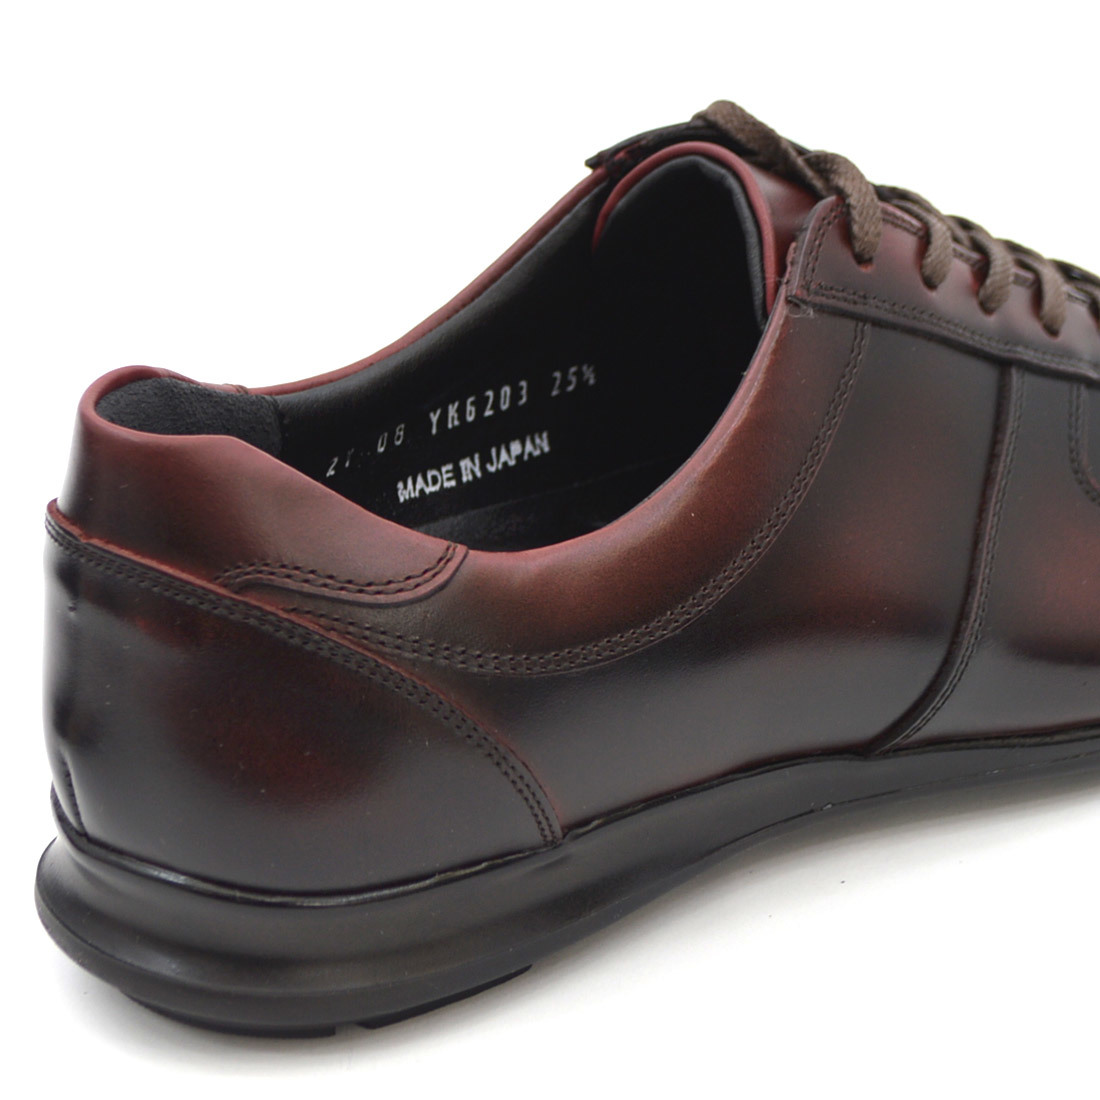 ^YUMI KATSURAyumikatsula casual shoes men's YK6203 made in Japan navy Navy navy blue 25.0cm (0910010641-na-s250)